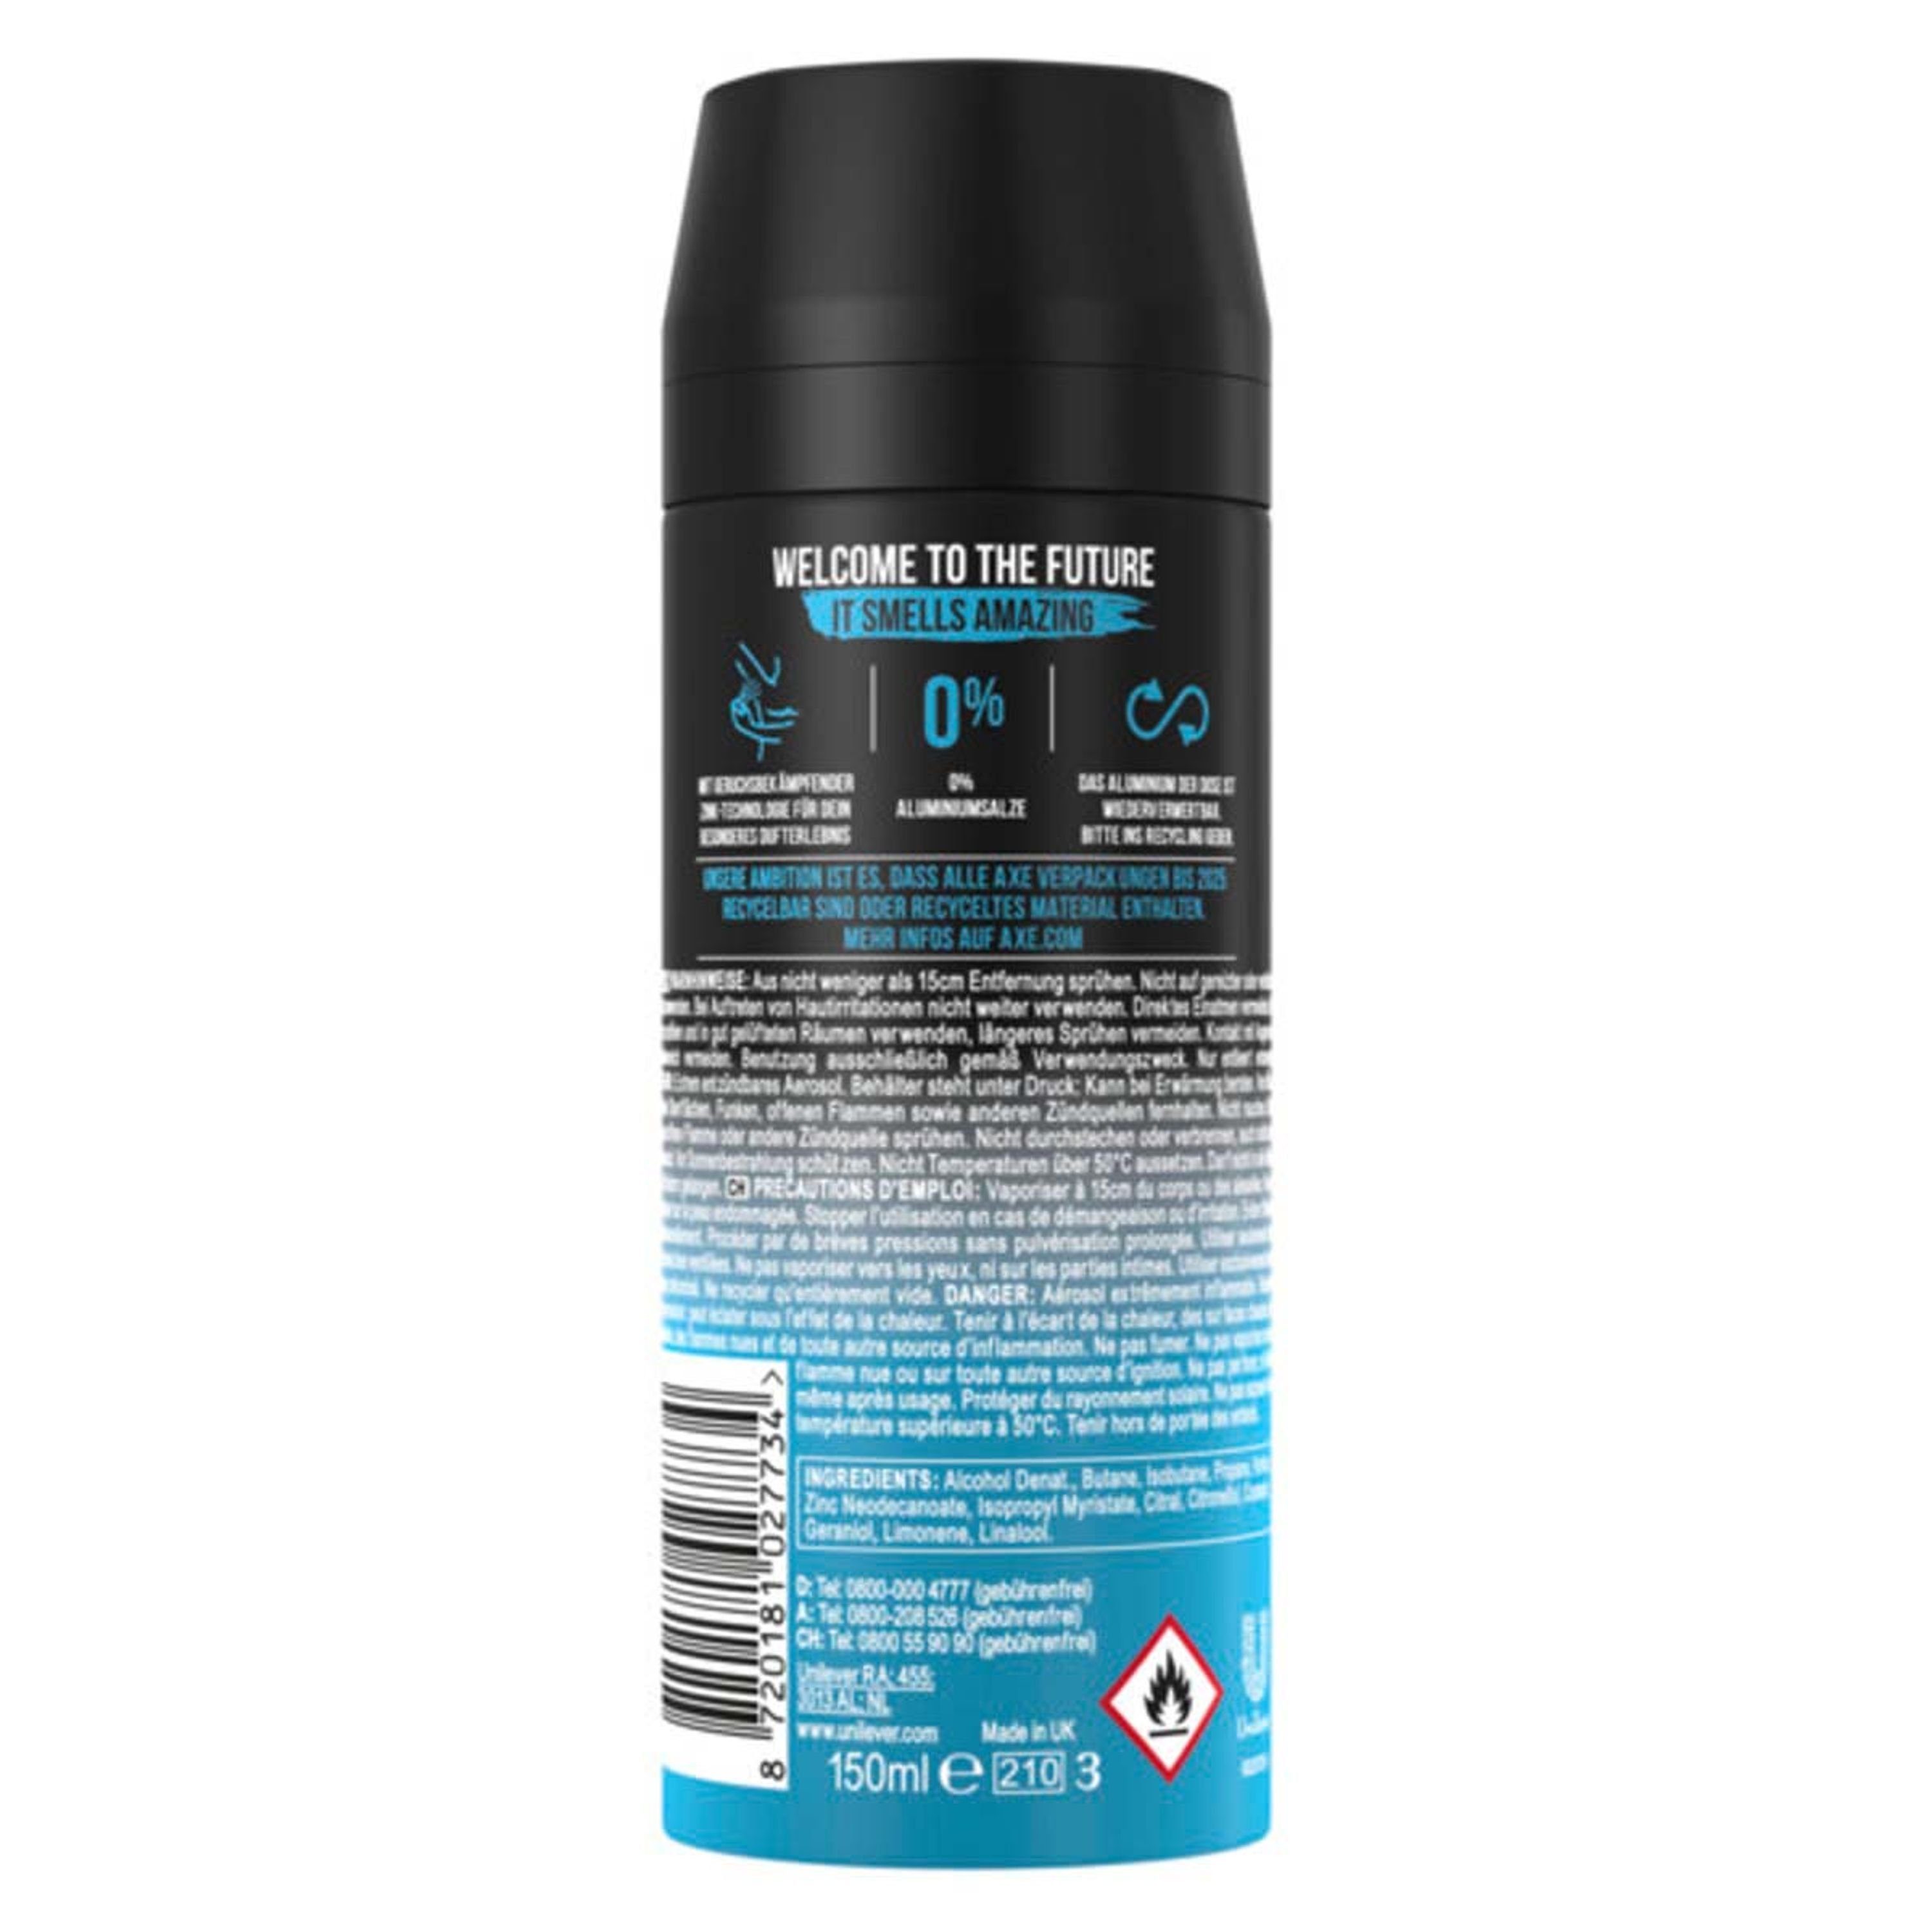 Deo-Set Männerdeo axe Deospray Deodorant Bodyspray Ice Chill 6x150ml Deo